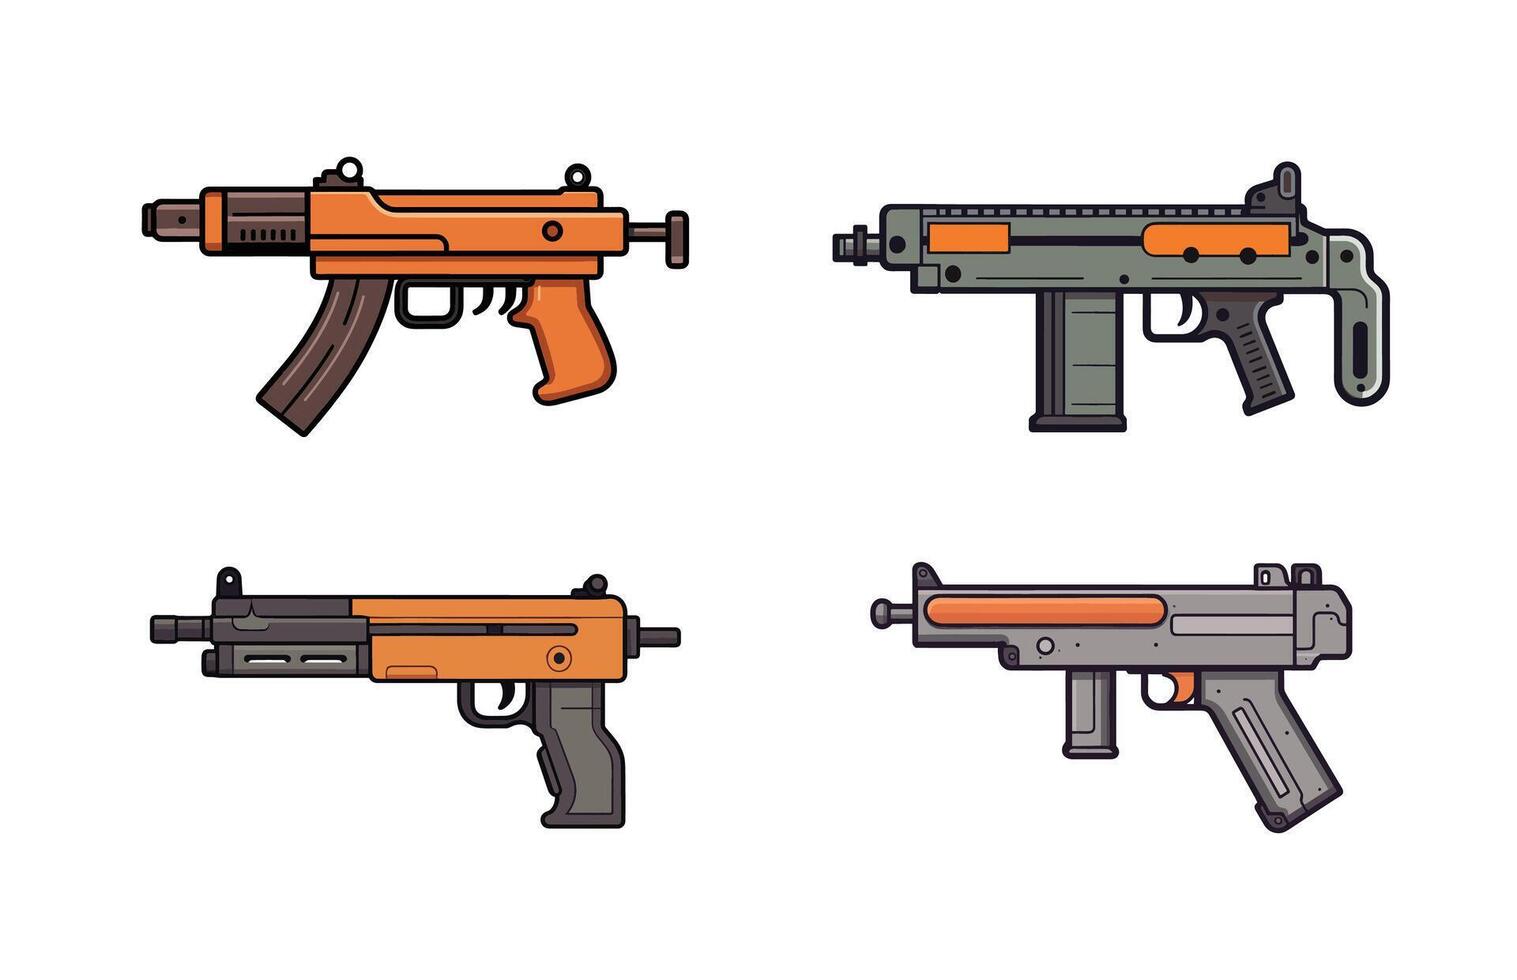 submáquina arma de fogo vetor definir, submáquina máquina mão arma de fogo armas estoque ilustração conjunto